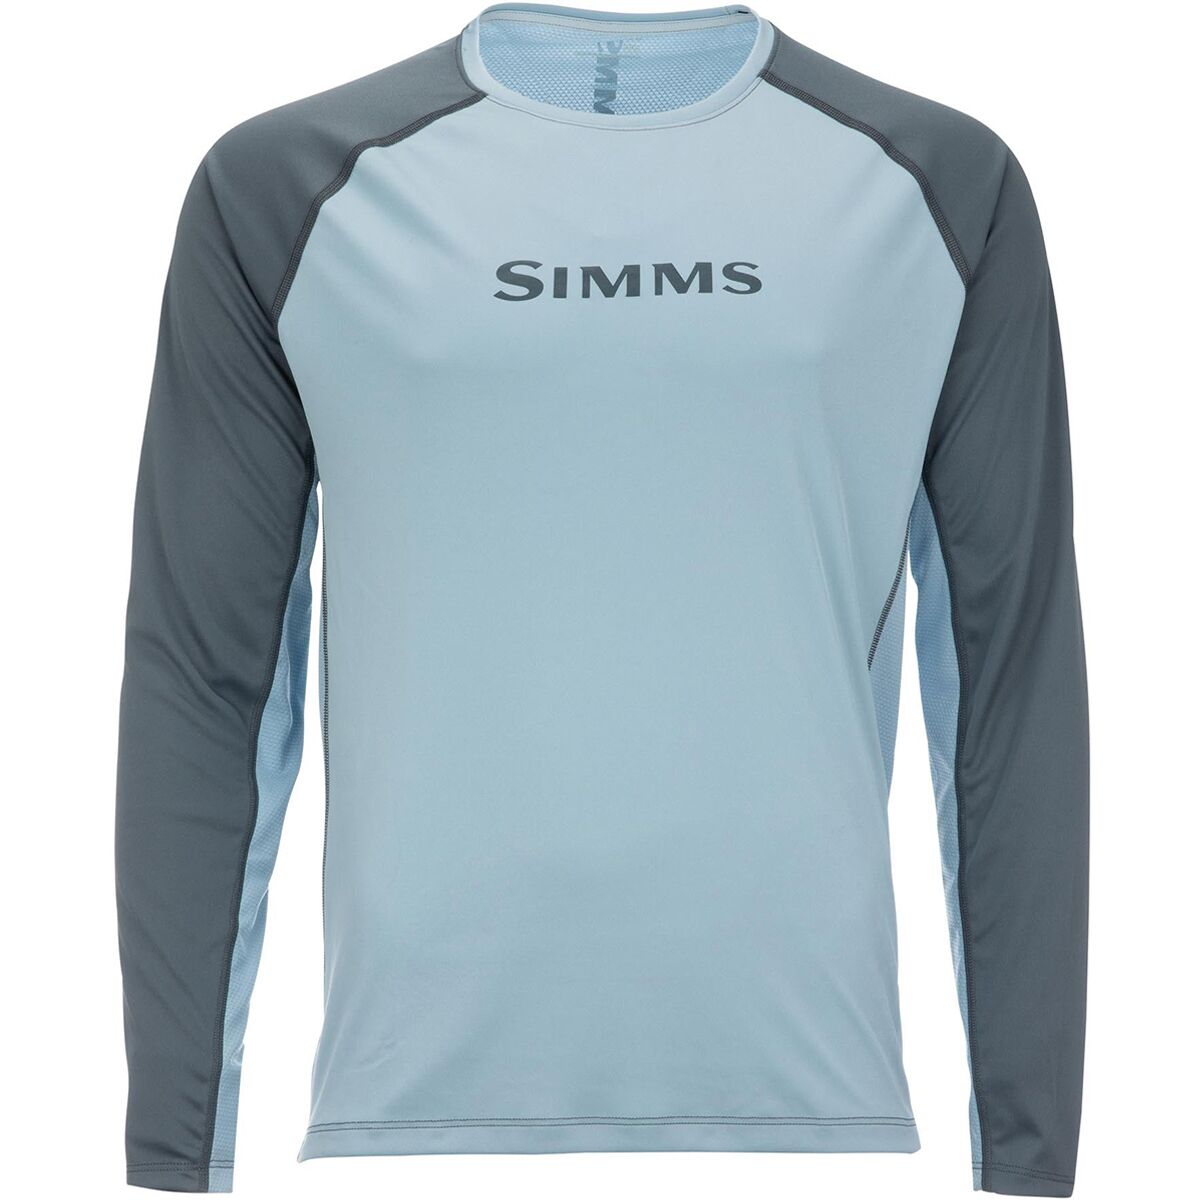 Simms SolarVent Crew Shirt - Men's